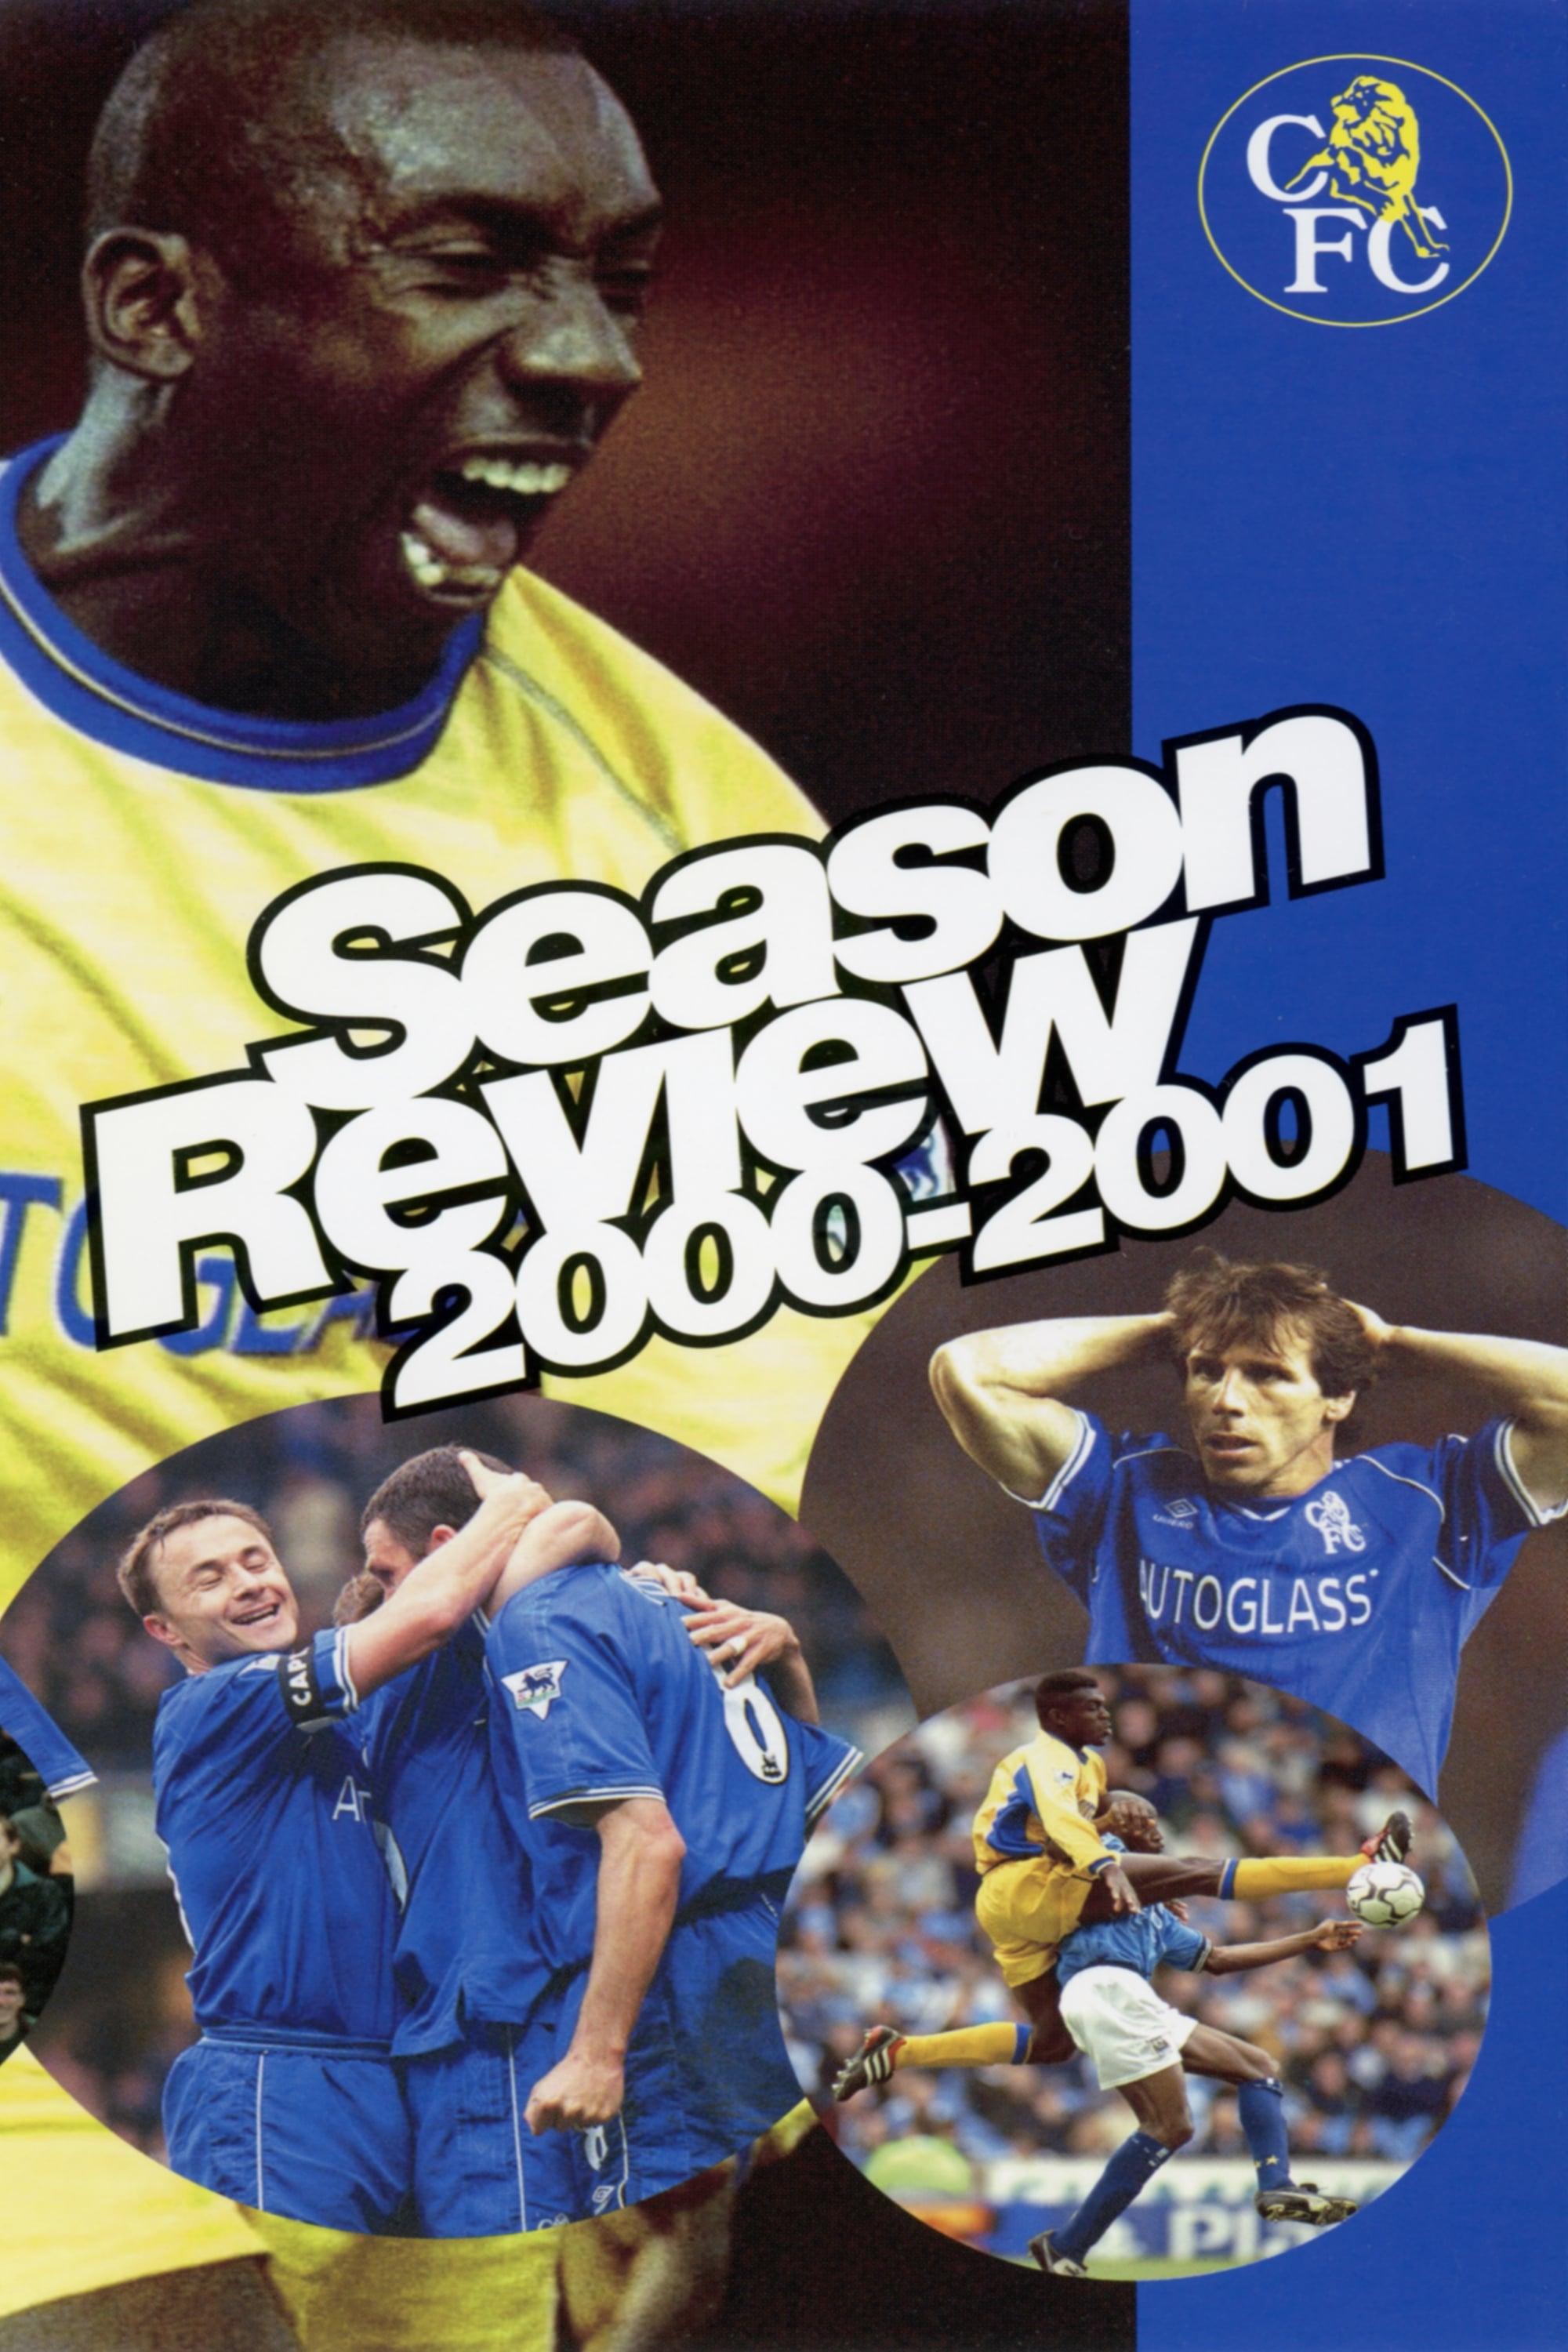 Chelsea FC - Season Review 2000/01 poster